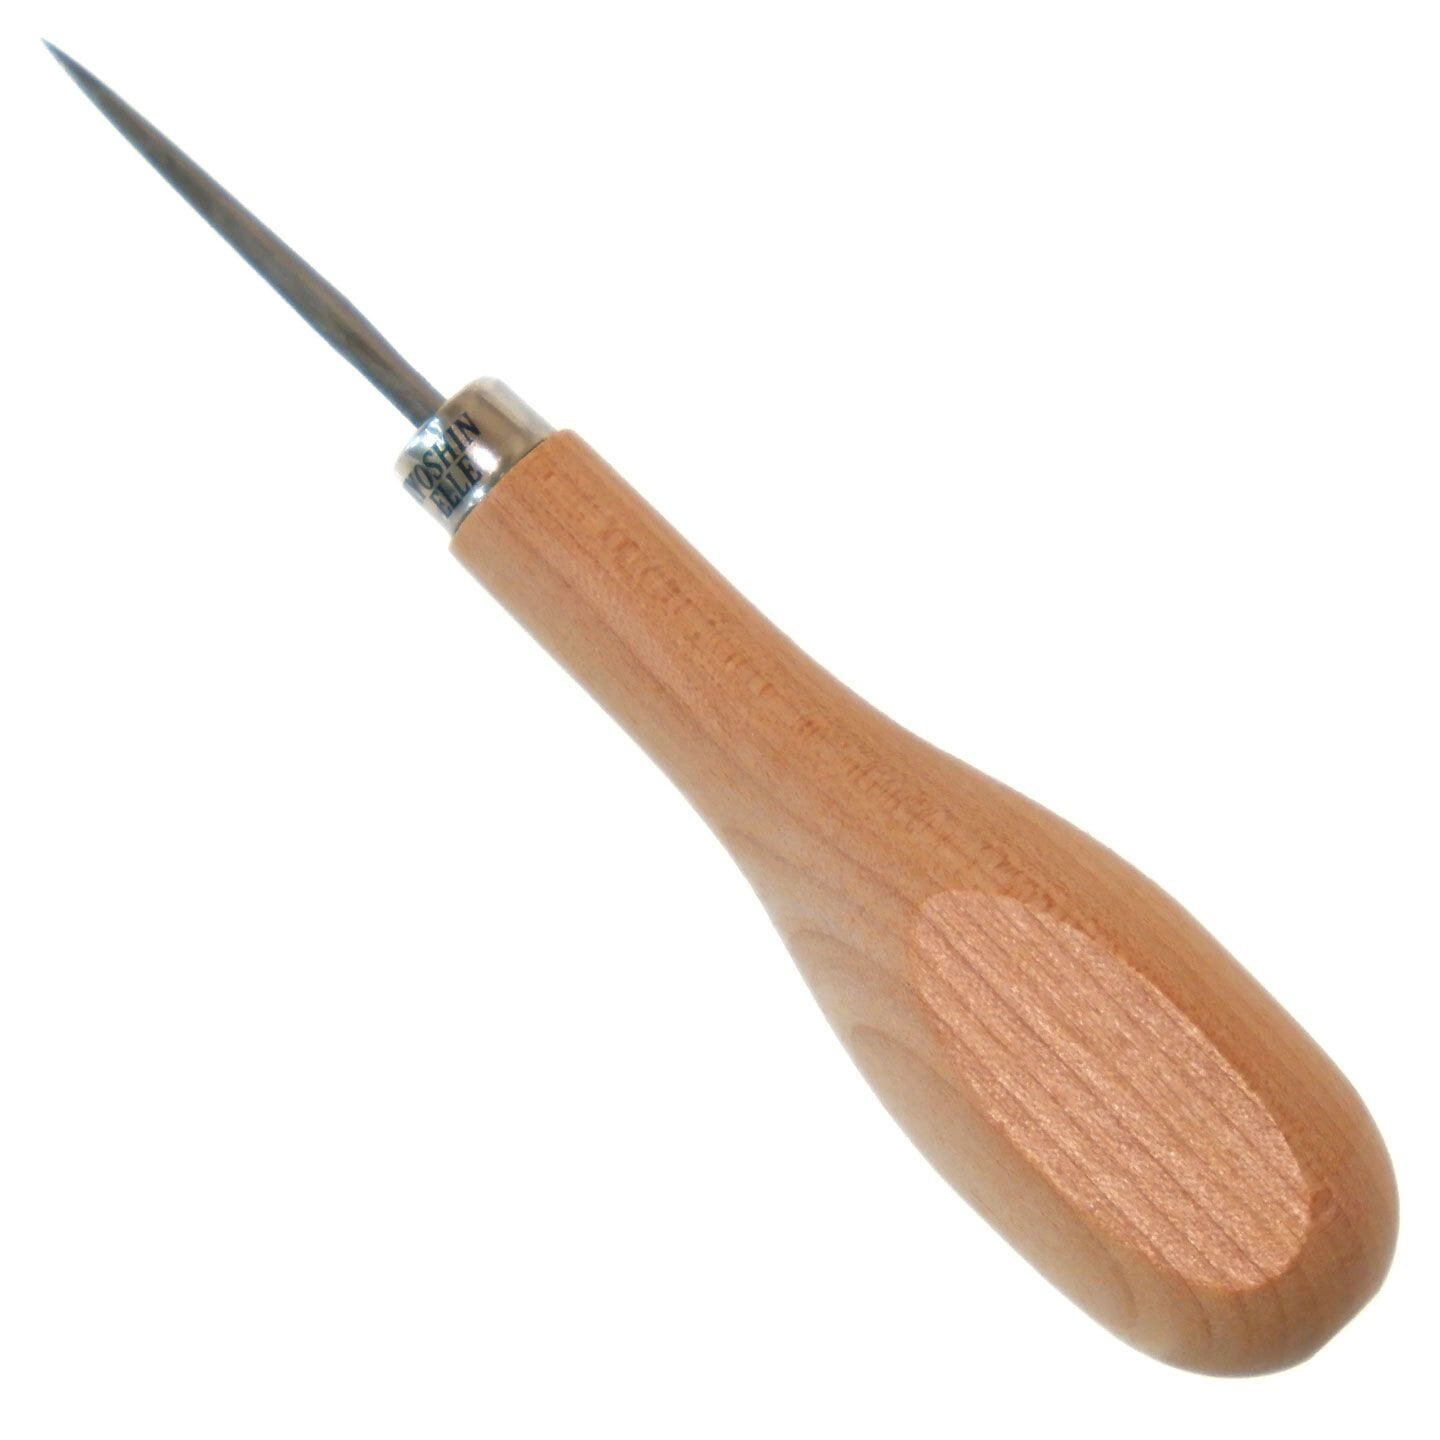 Leather Awl Tool Craft Sewing Punching Hole Maker Stitching Overstitch Needle G 